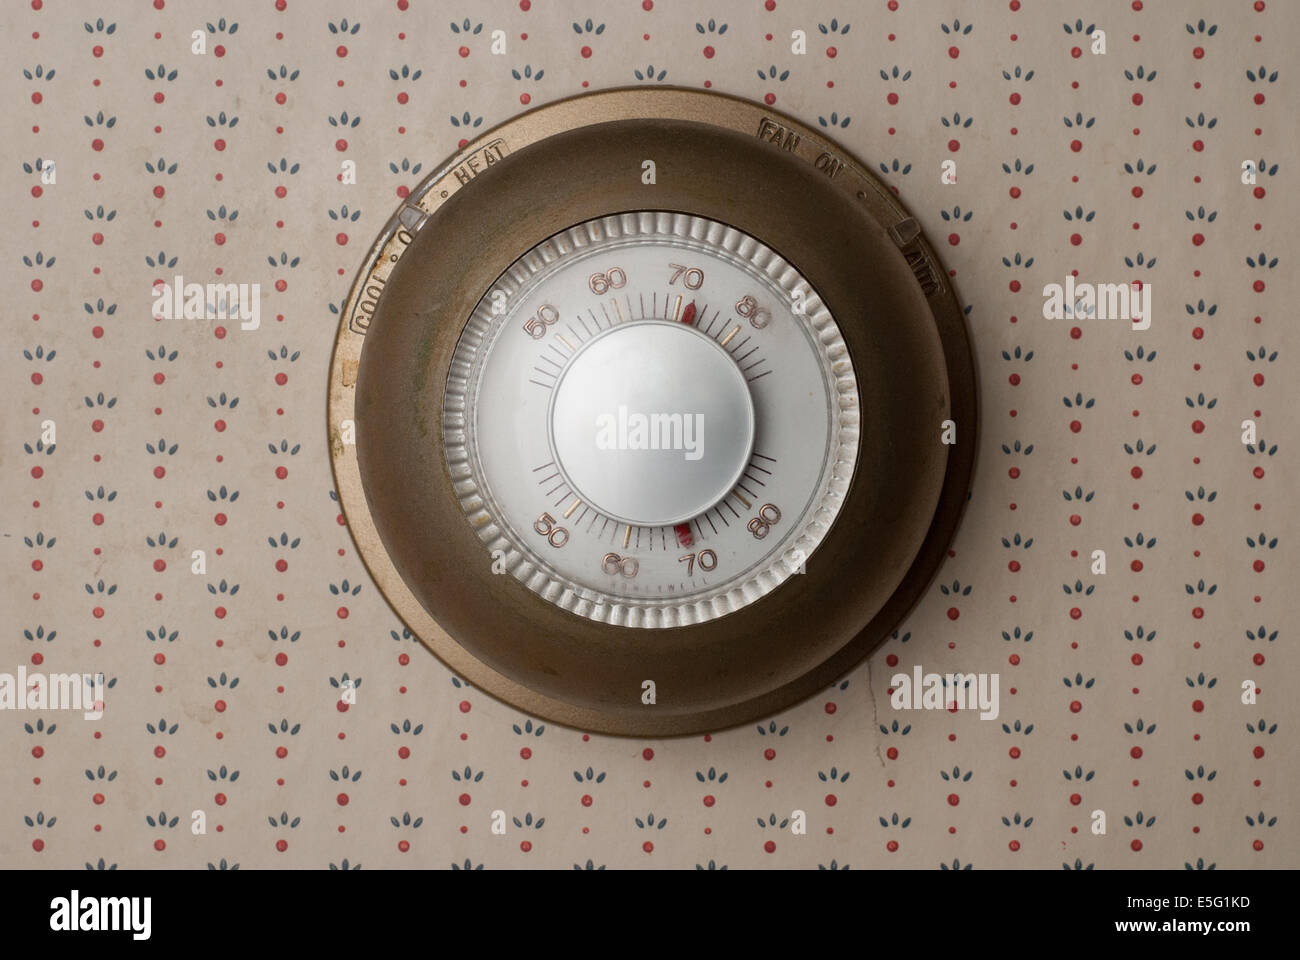 Old fashioned, veraltet Thermostat auf alte Tapete Stockfotografie - Alamy